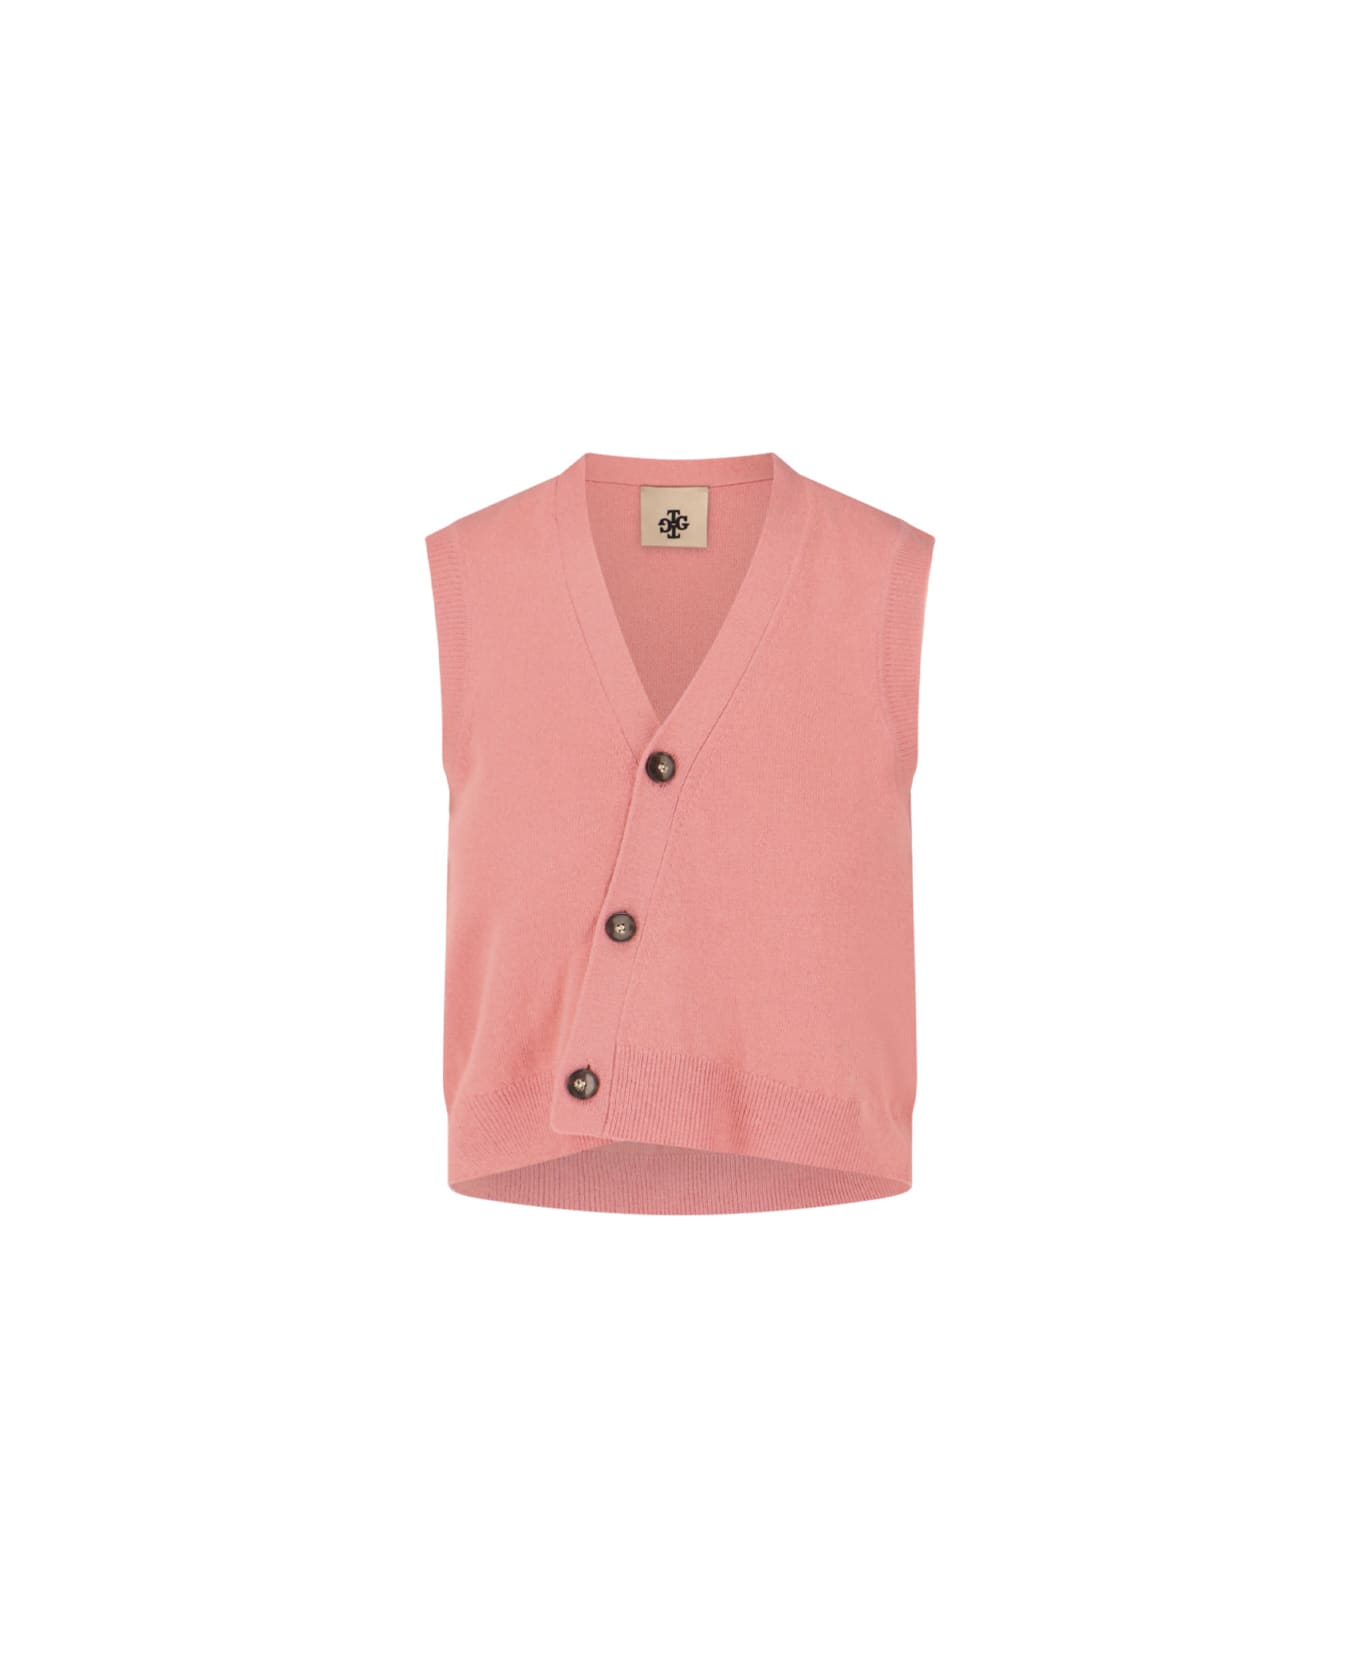 The Garment Vest "como" - Pink